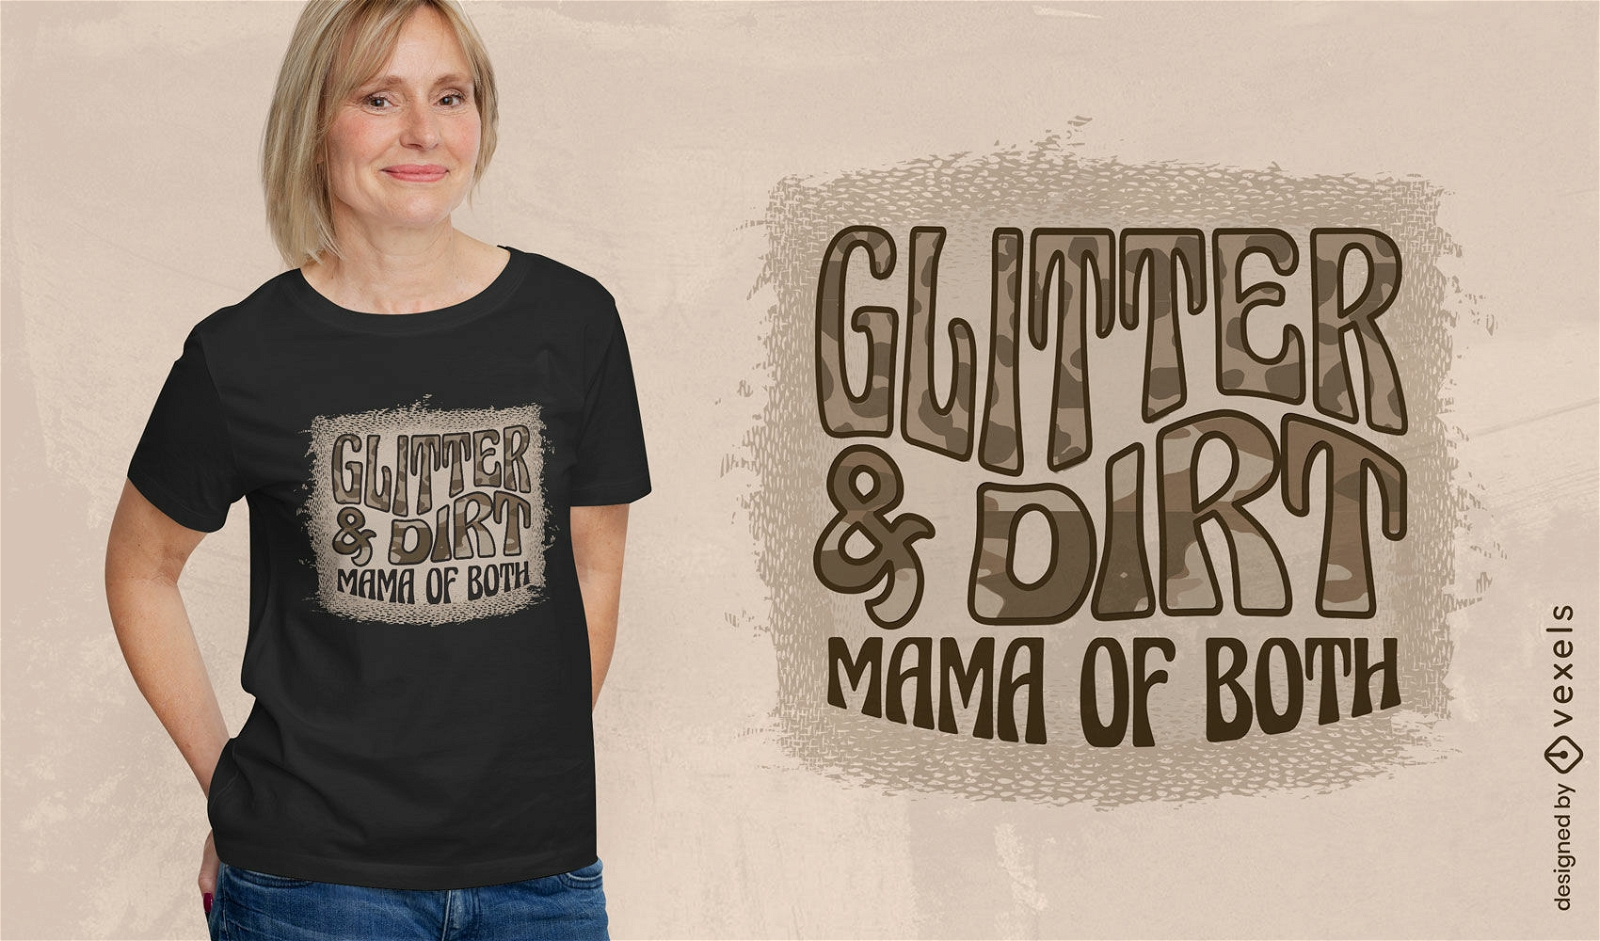 Diseño de camiseta Glitter & Dirt Mama de ambos.